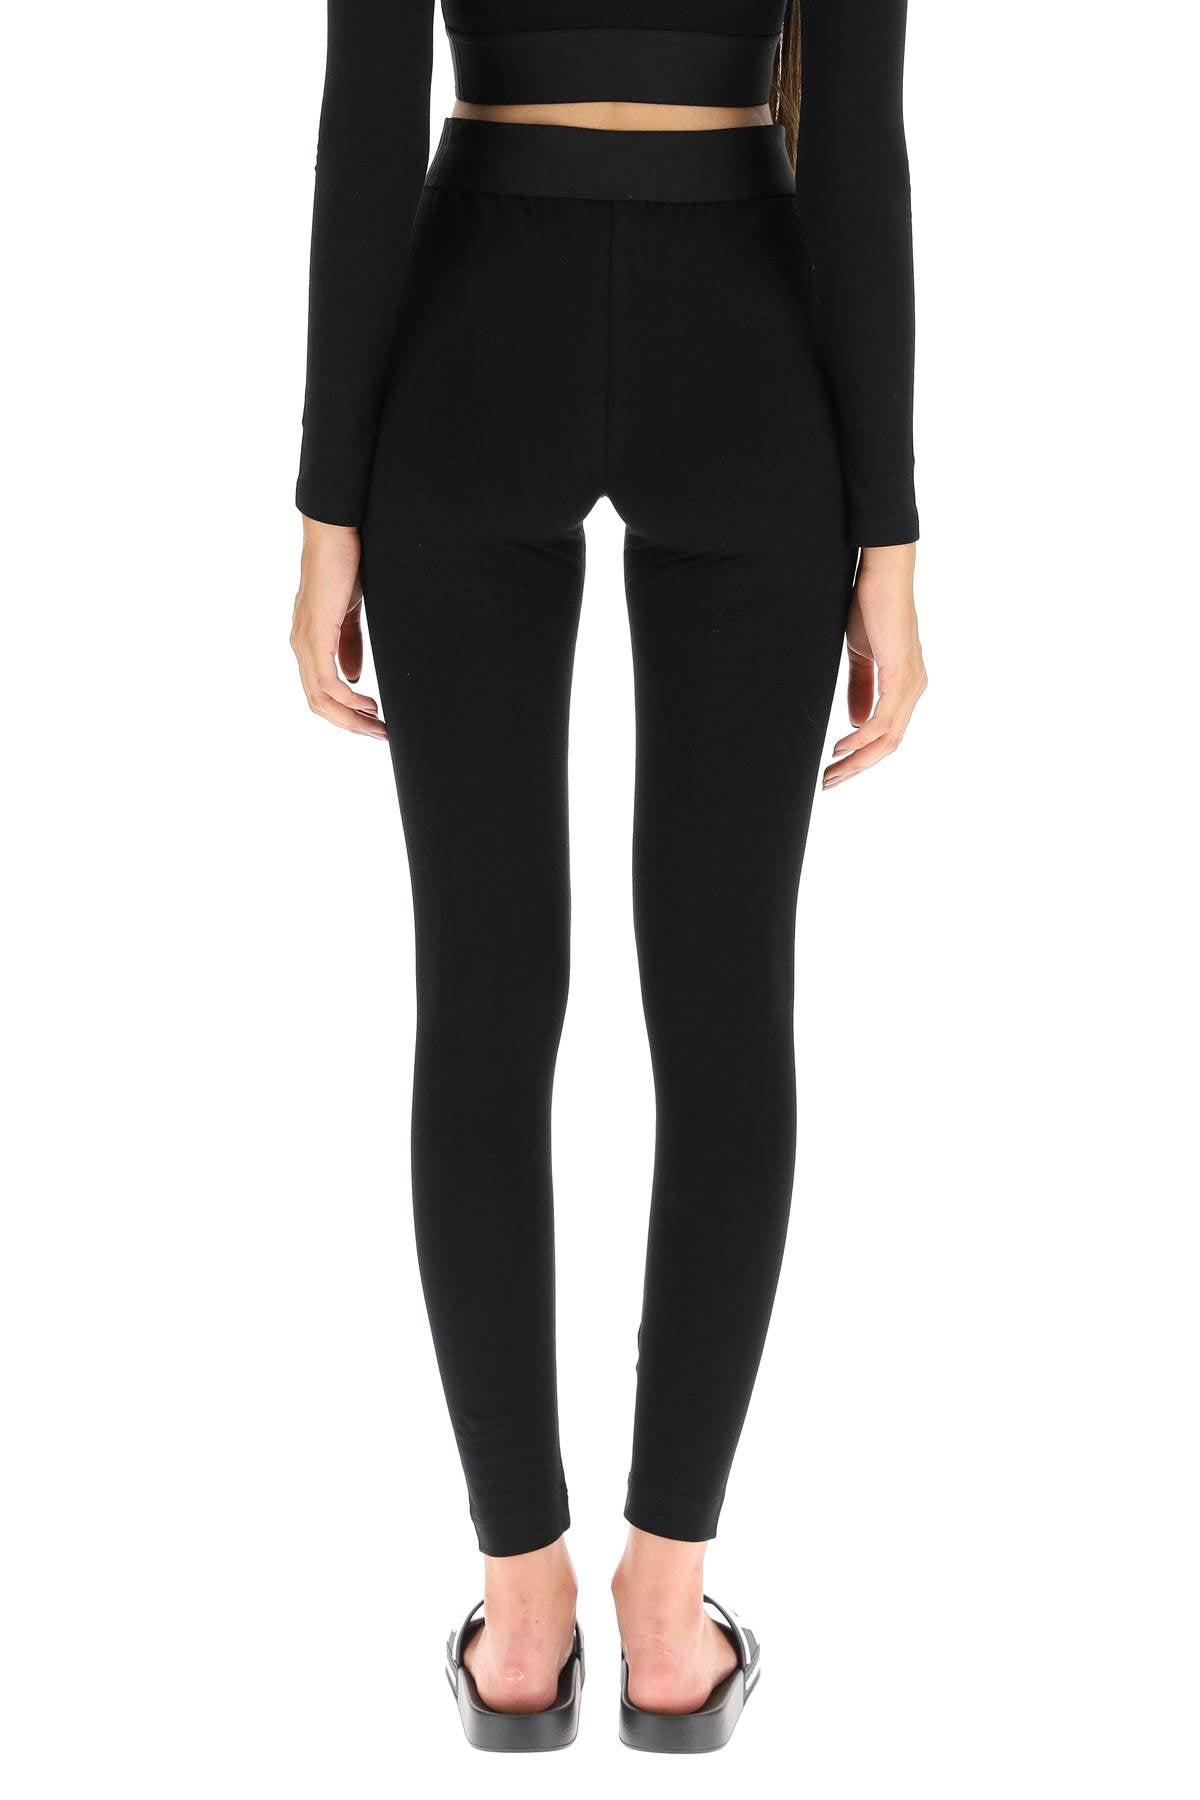 Dolce & Gabbana Logo leggings in Black | Lyst